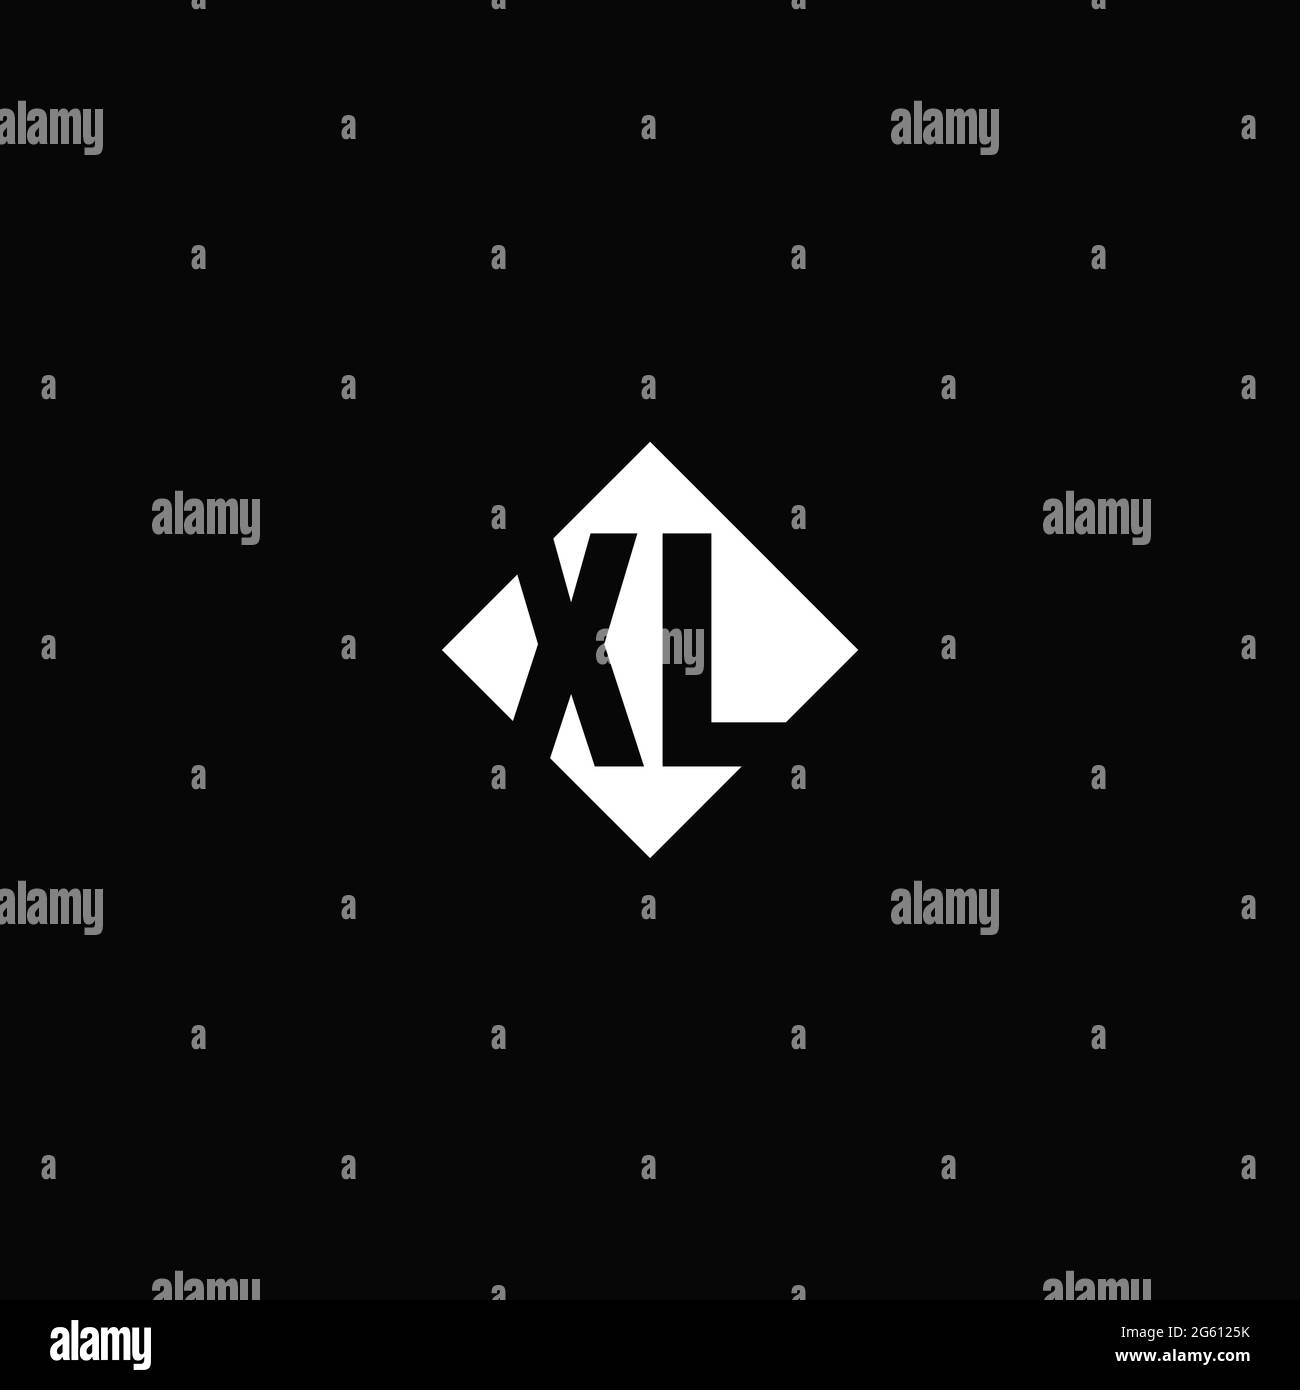 Monogram logo design with diamond square shape isolated on black background Stock Vector